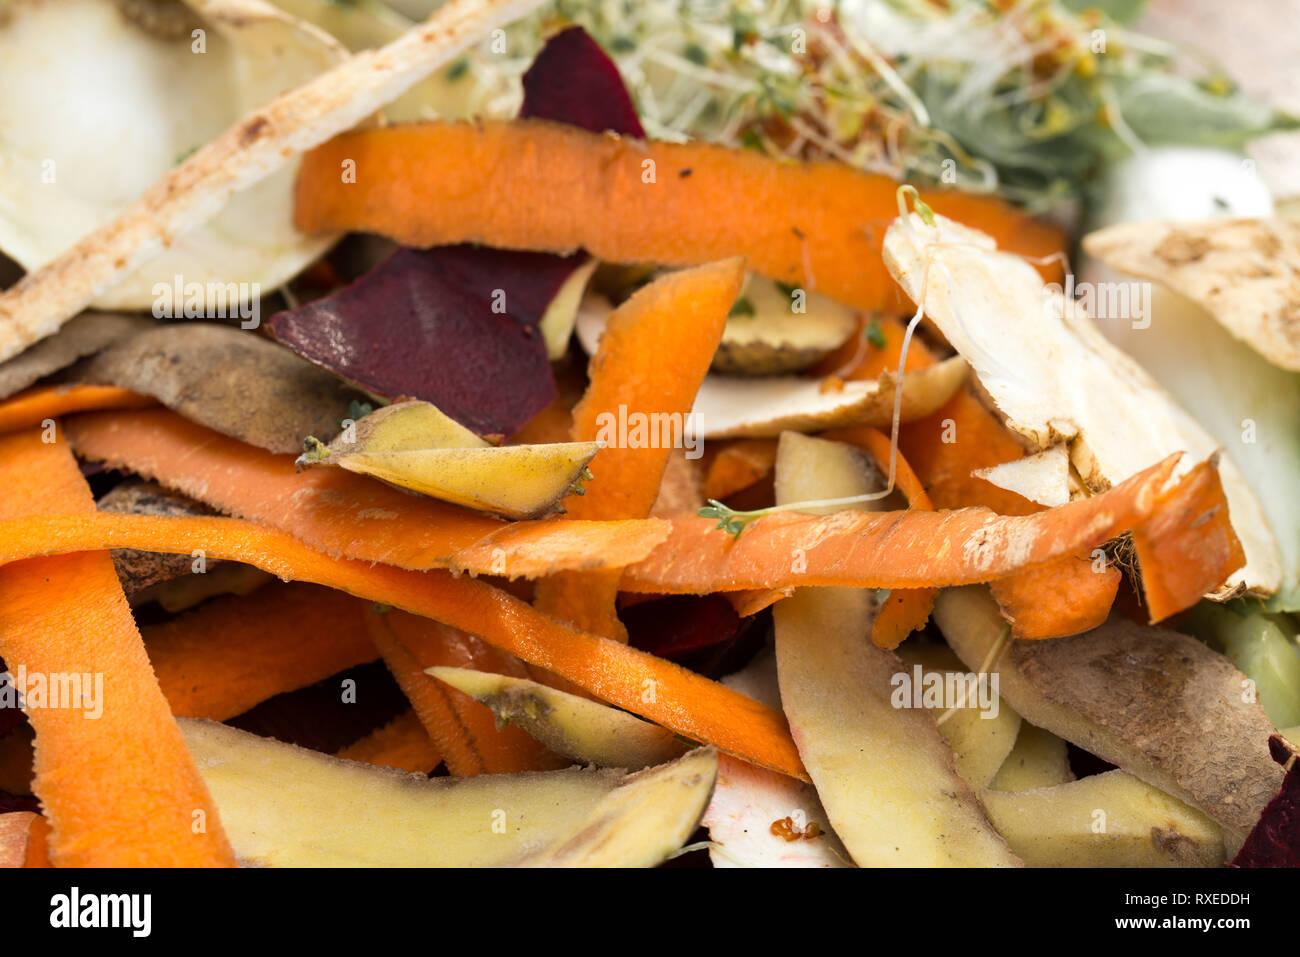 vegetable rotten peelings in composting pile Stock Photo